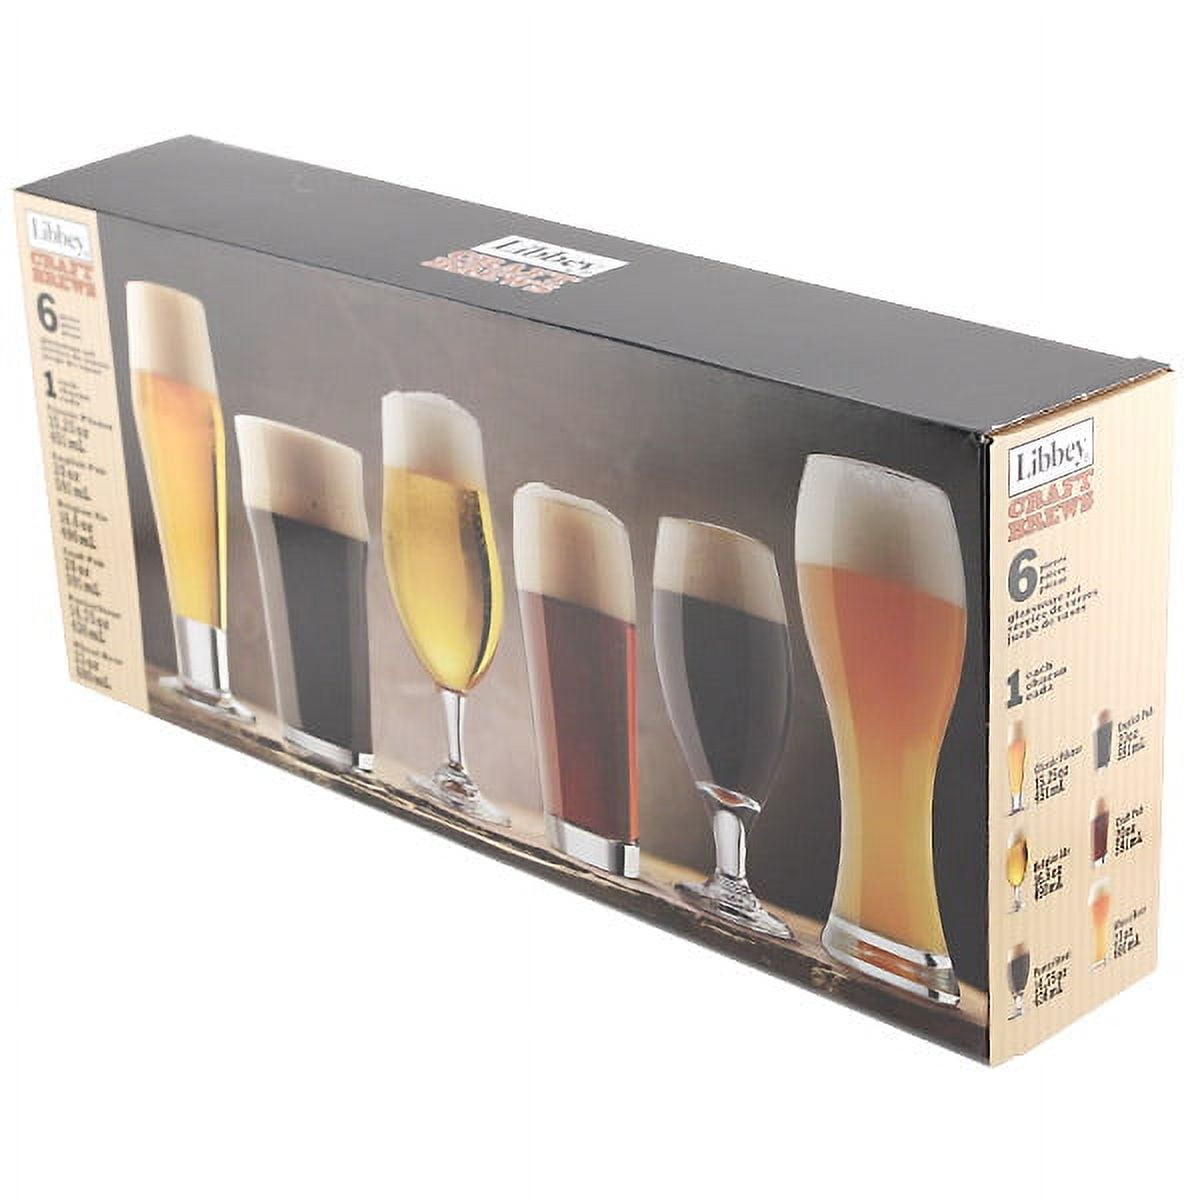 Libbey Craft Brews Assorted Beer Glasses, Set of 6